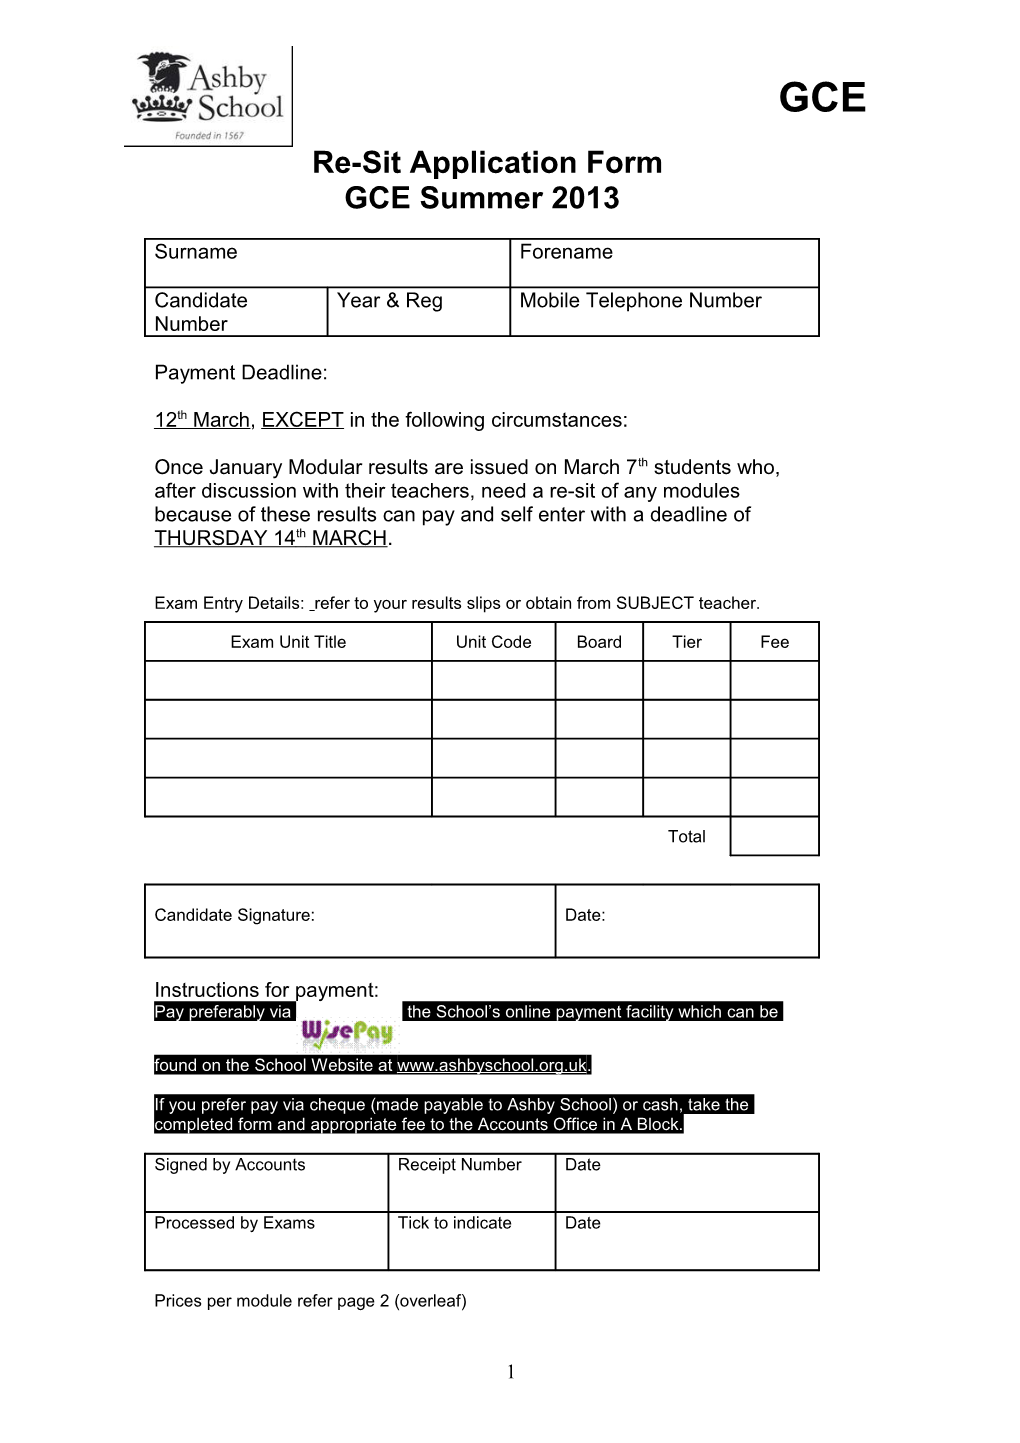 Re-Sit Application Form